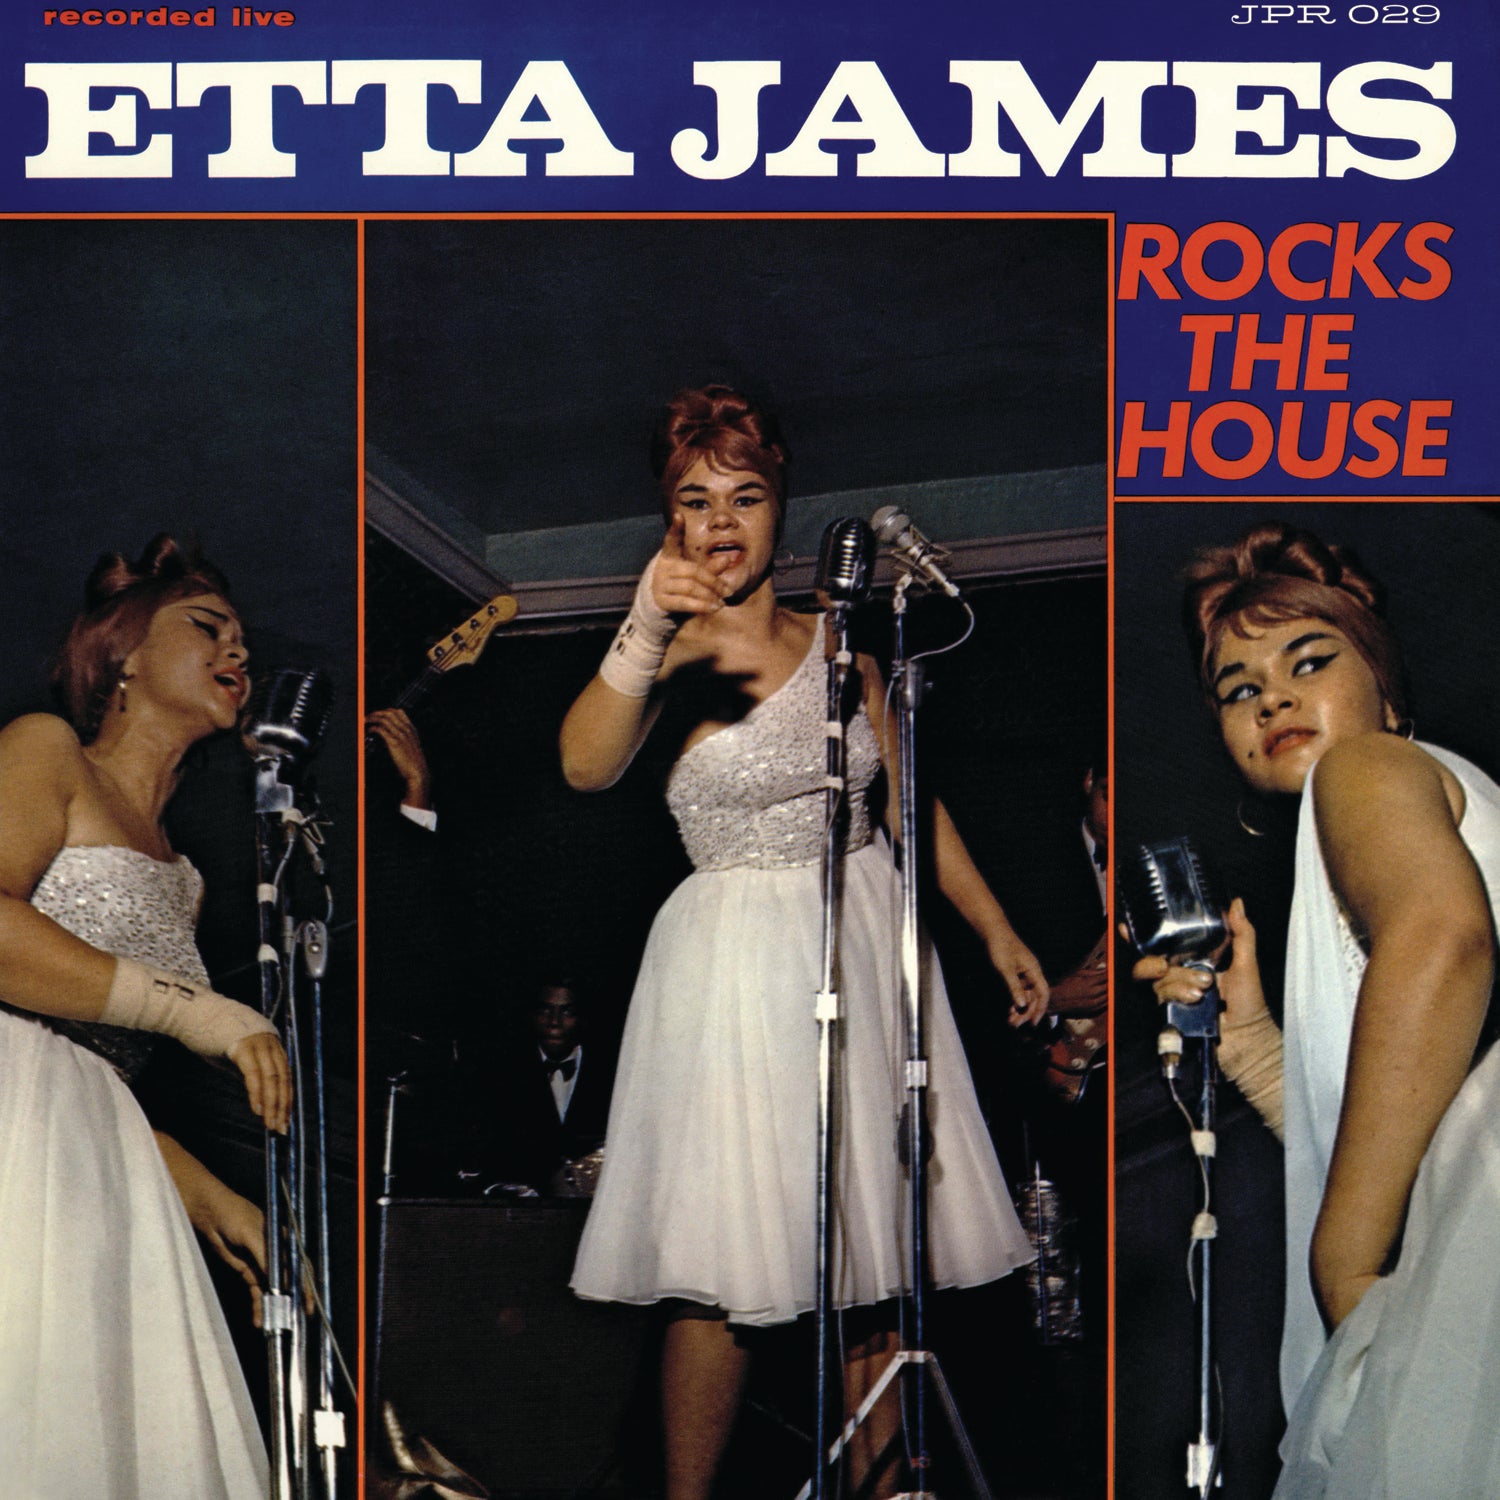 Etta James "Rocks the House" LP